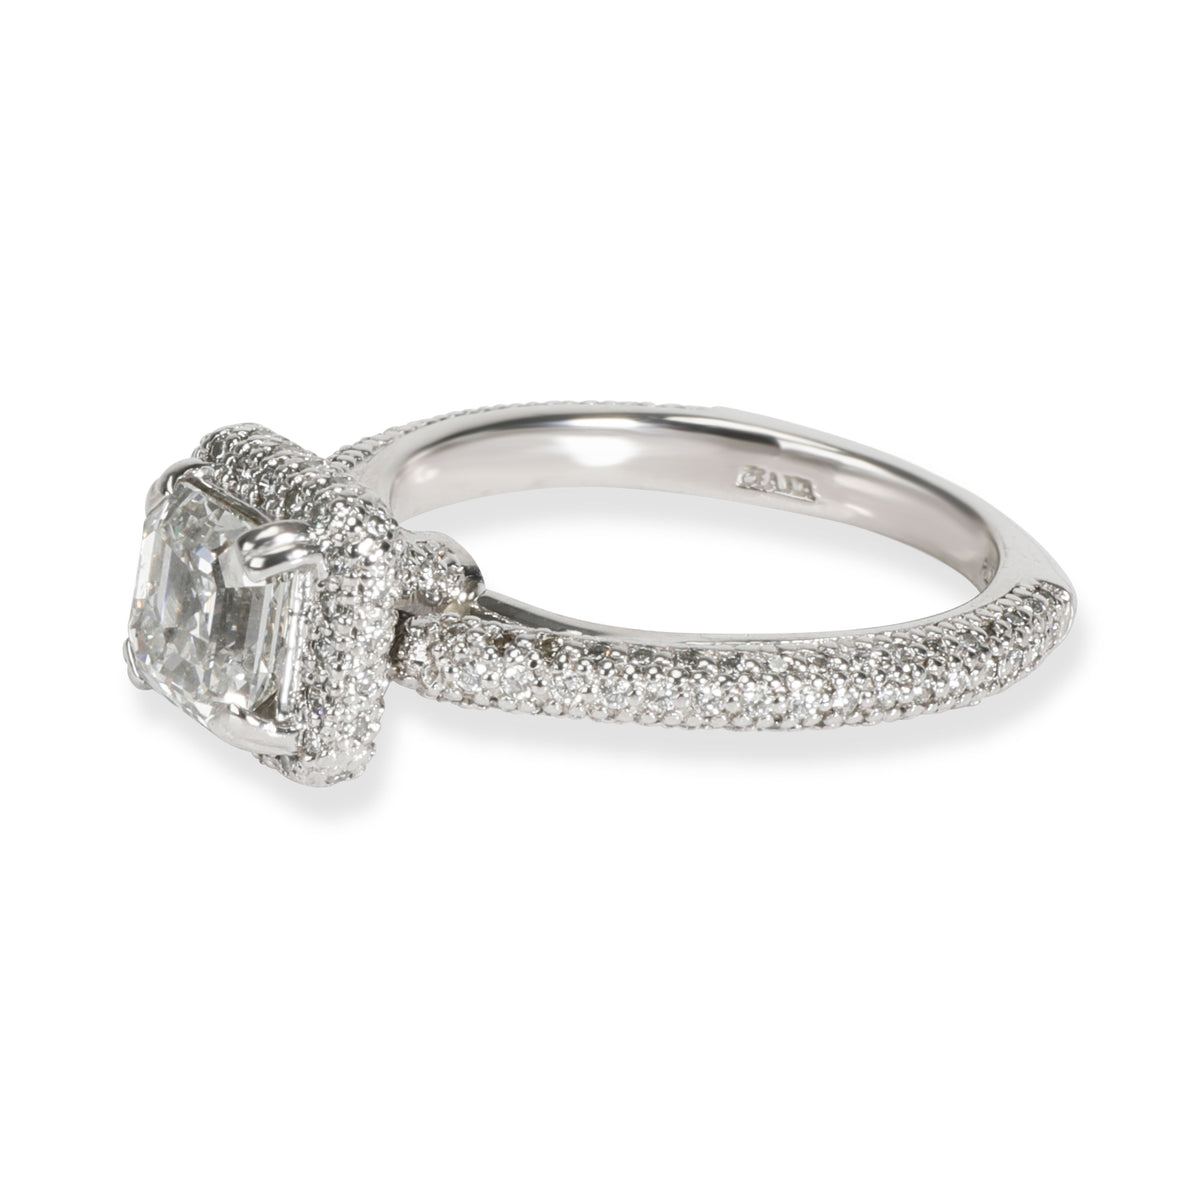 Halo Diamond Emerald Engagement Ring in Platinum F SI1 1.75 CTW